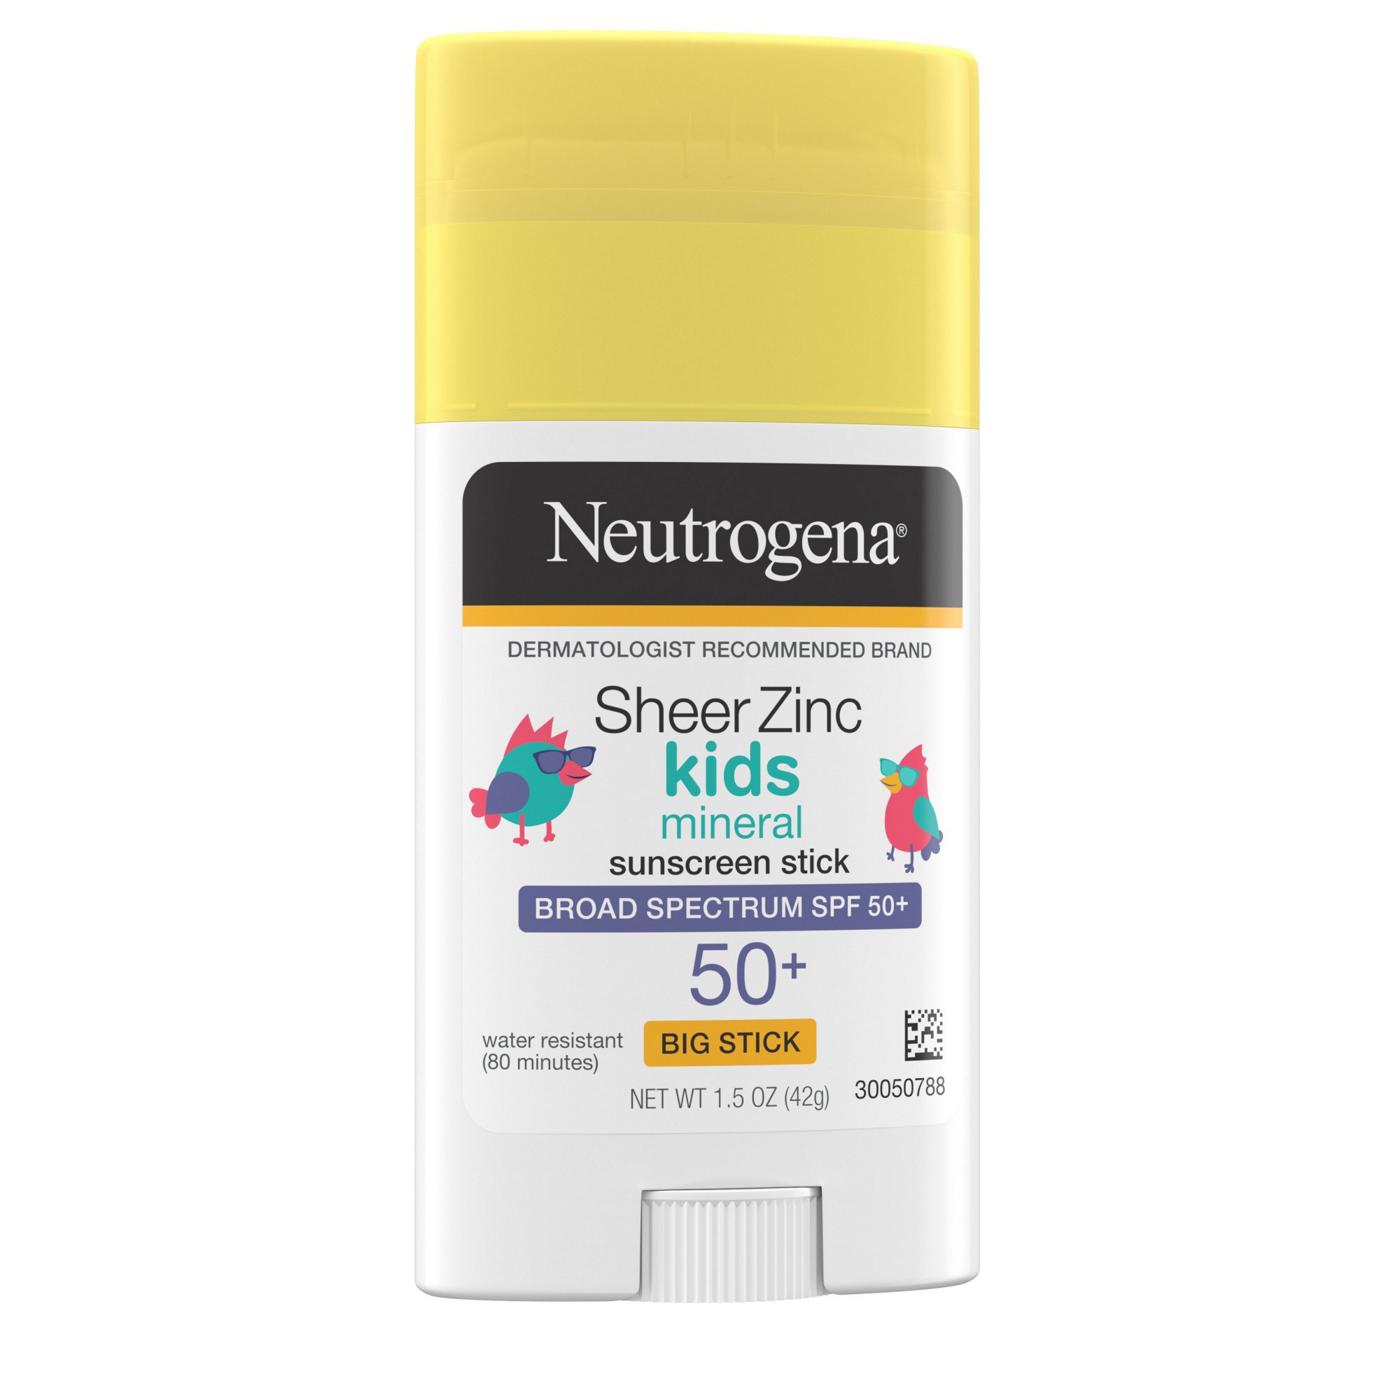 Neutrogena Sheer Zinc Kids Mineral Sunscreen Stick - SPF 50+; image 7 of 8